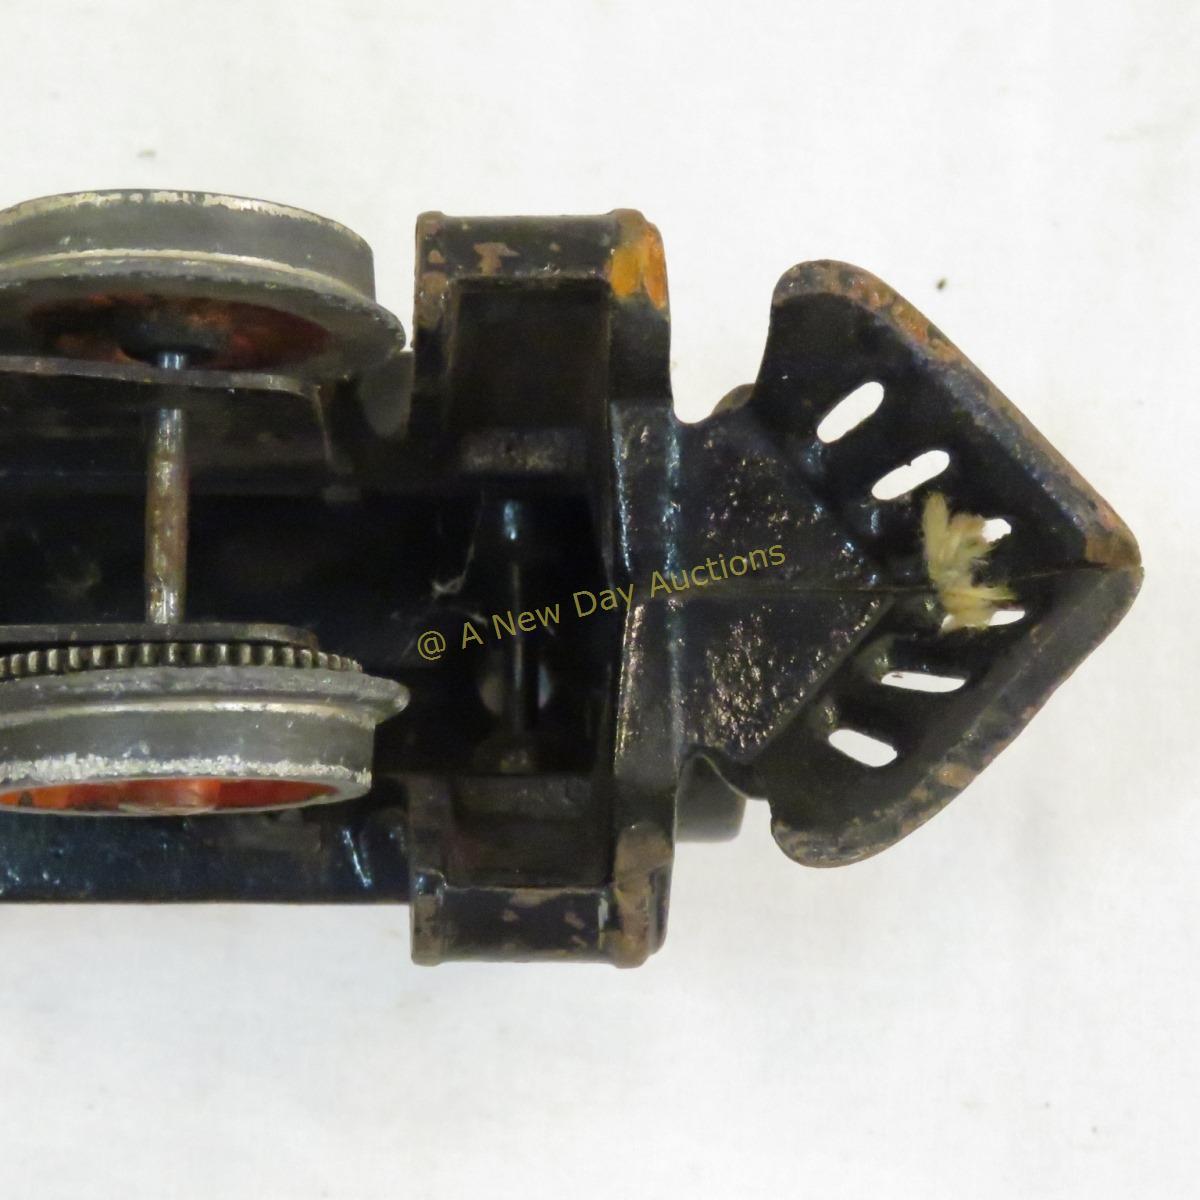 Pre-war Bing cast iron engine, tin tenders & cars